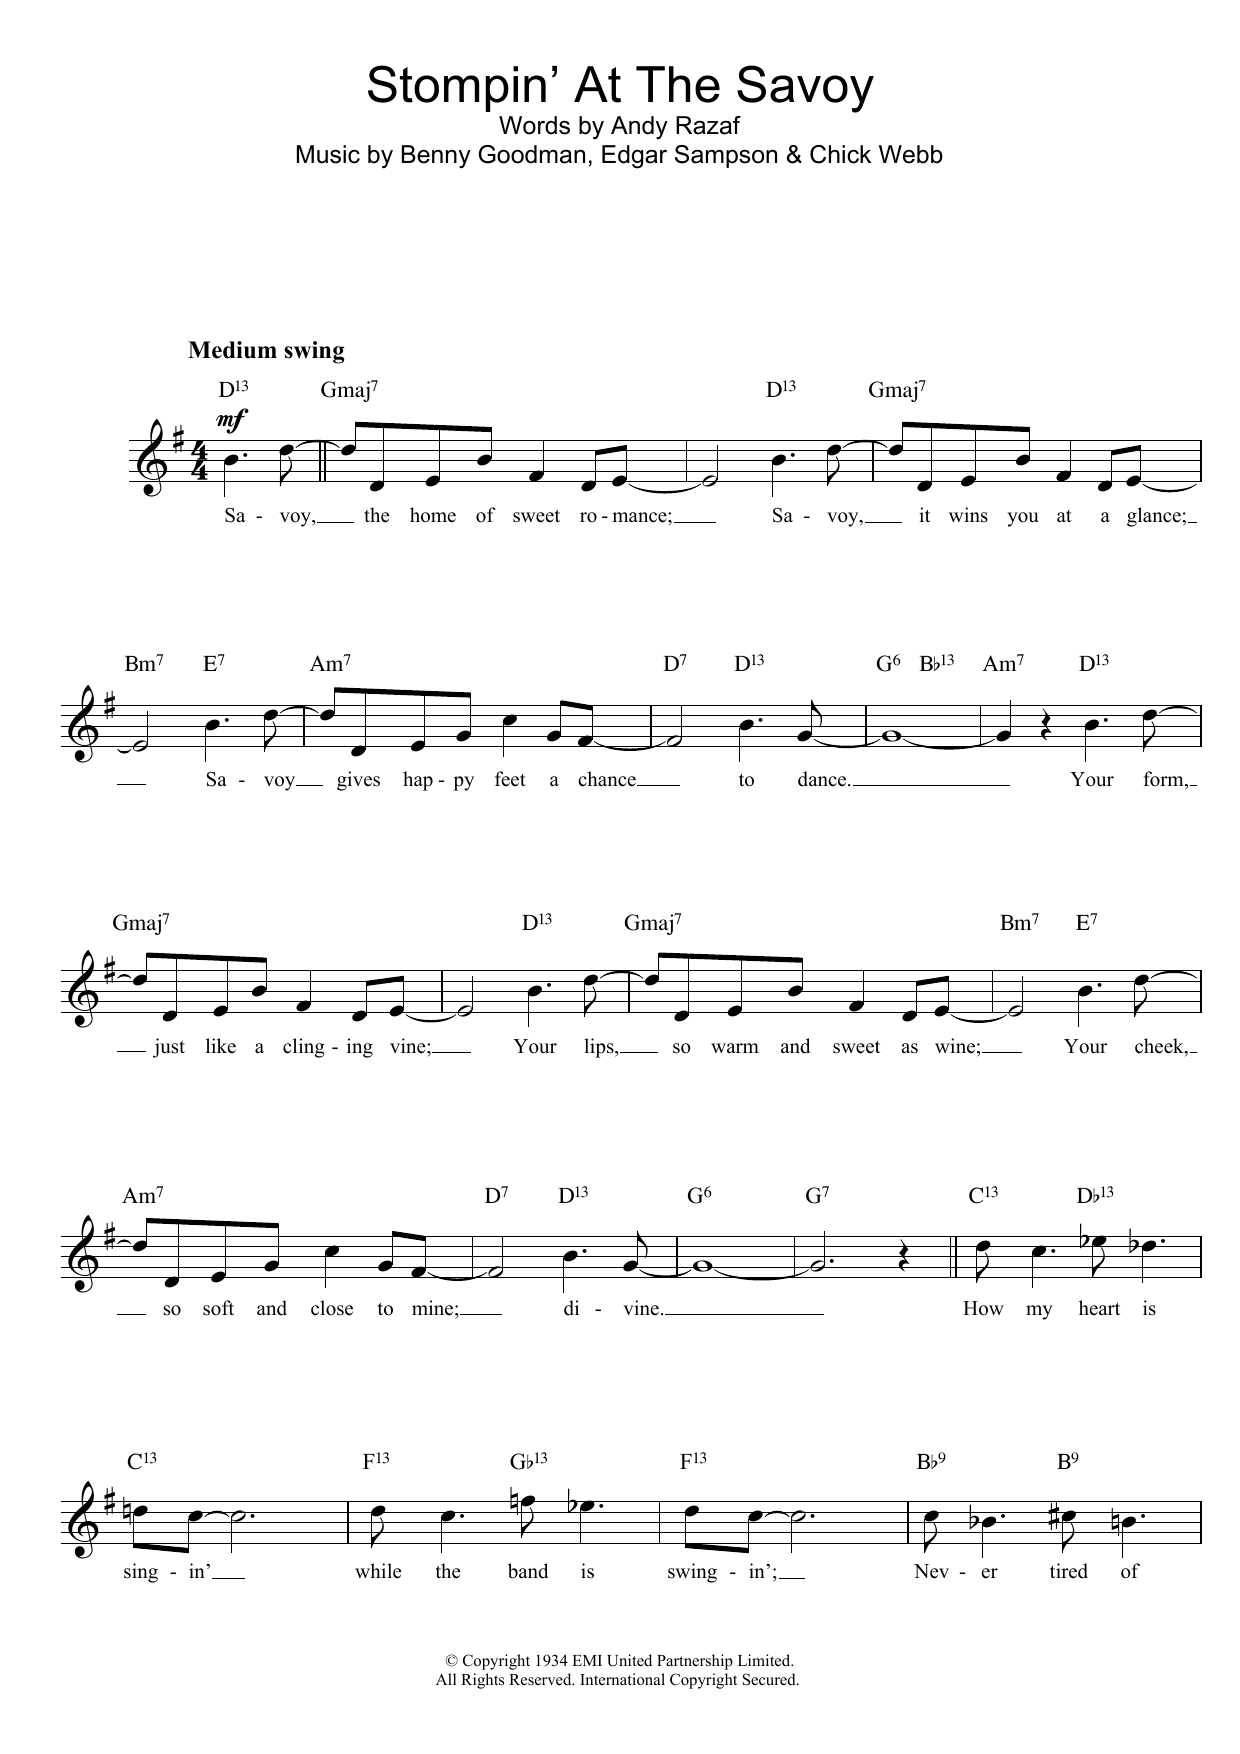 Benny Goodman Stompin' At The Savoy Sheet Music Notes & Chords for Real Book - Melody, Lyrics & Chords - C Instruments - Download or Print PDF